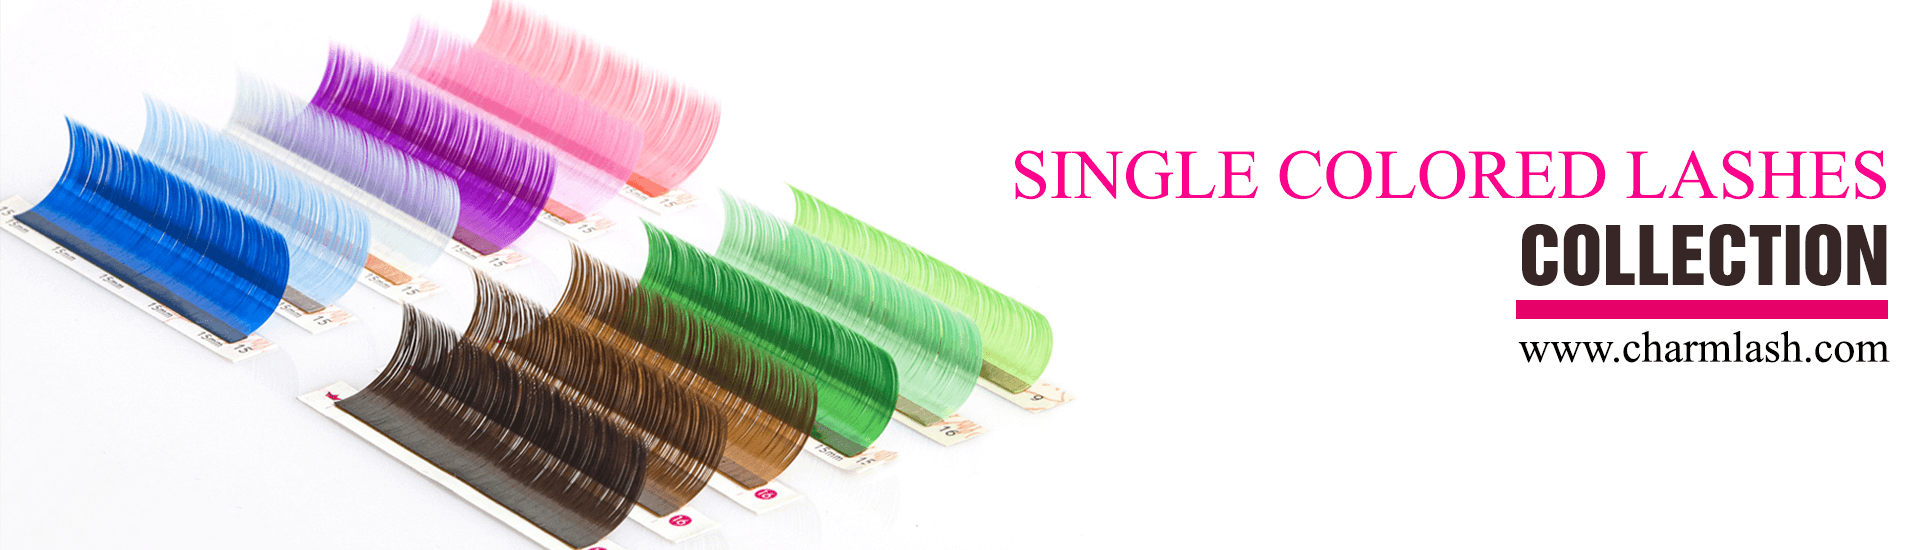 single-colored-lashes